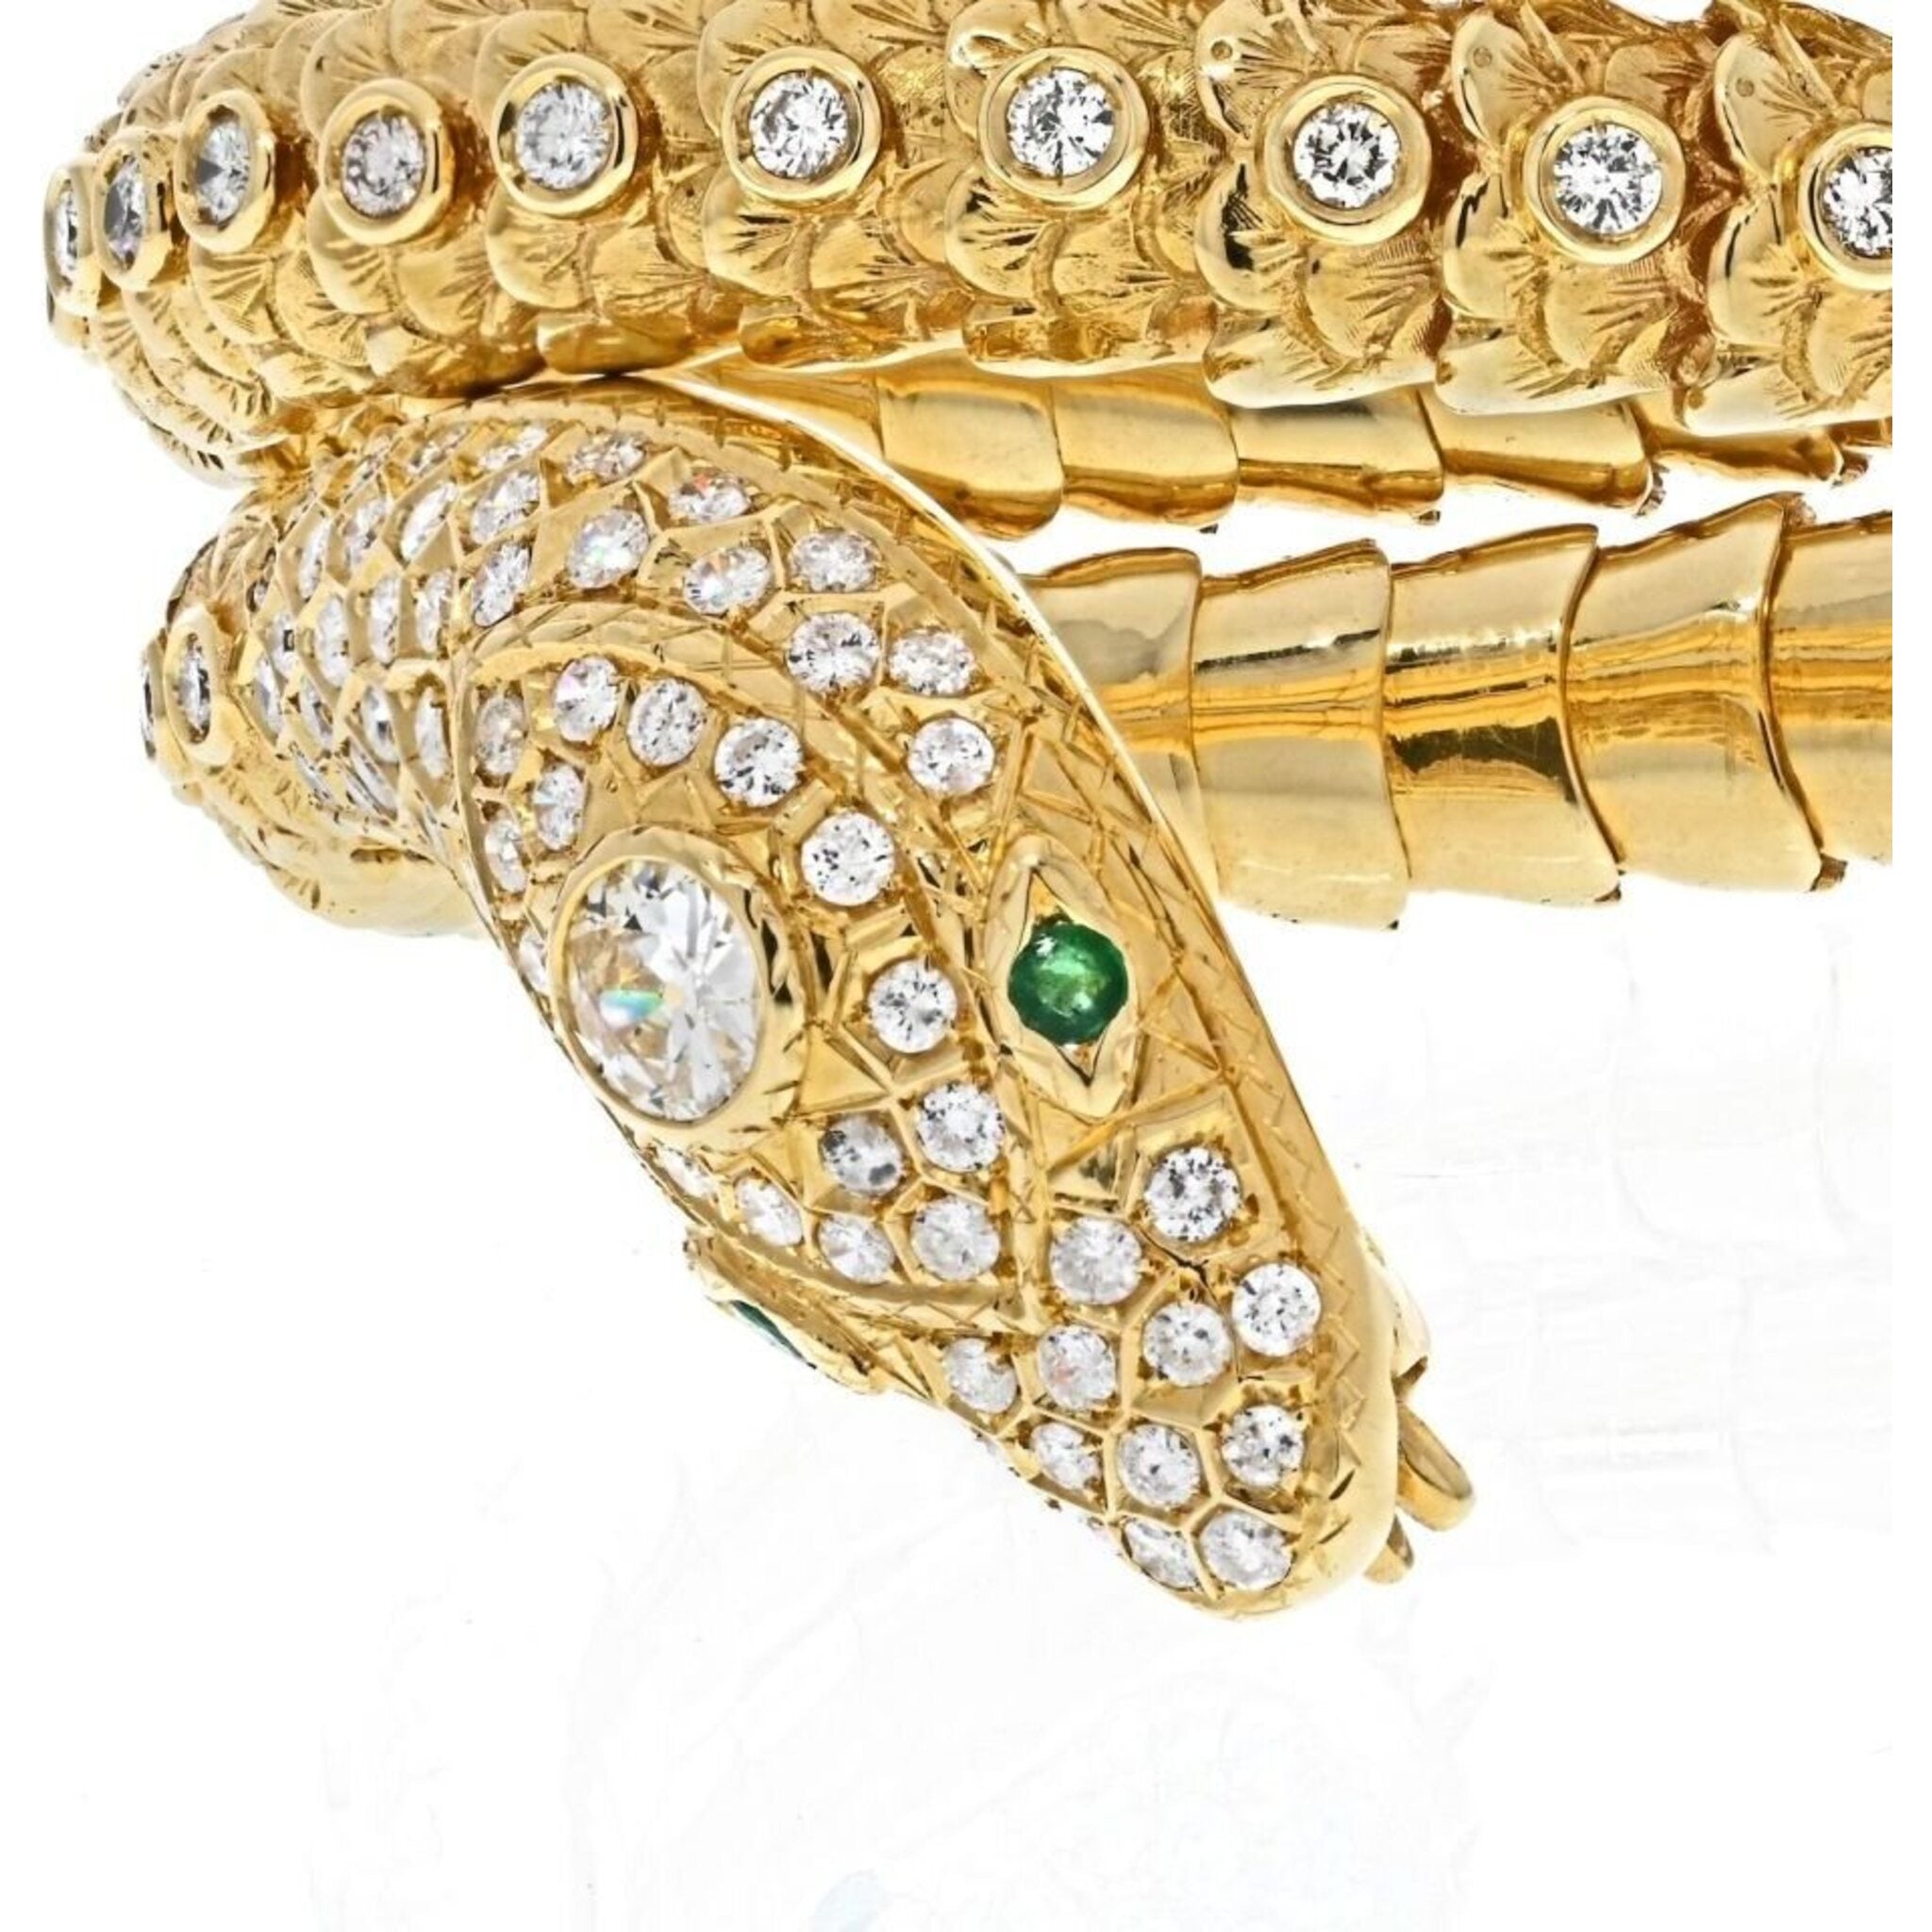 2 Timeless Luxury Gold Bracelets Every Man Should Own